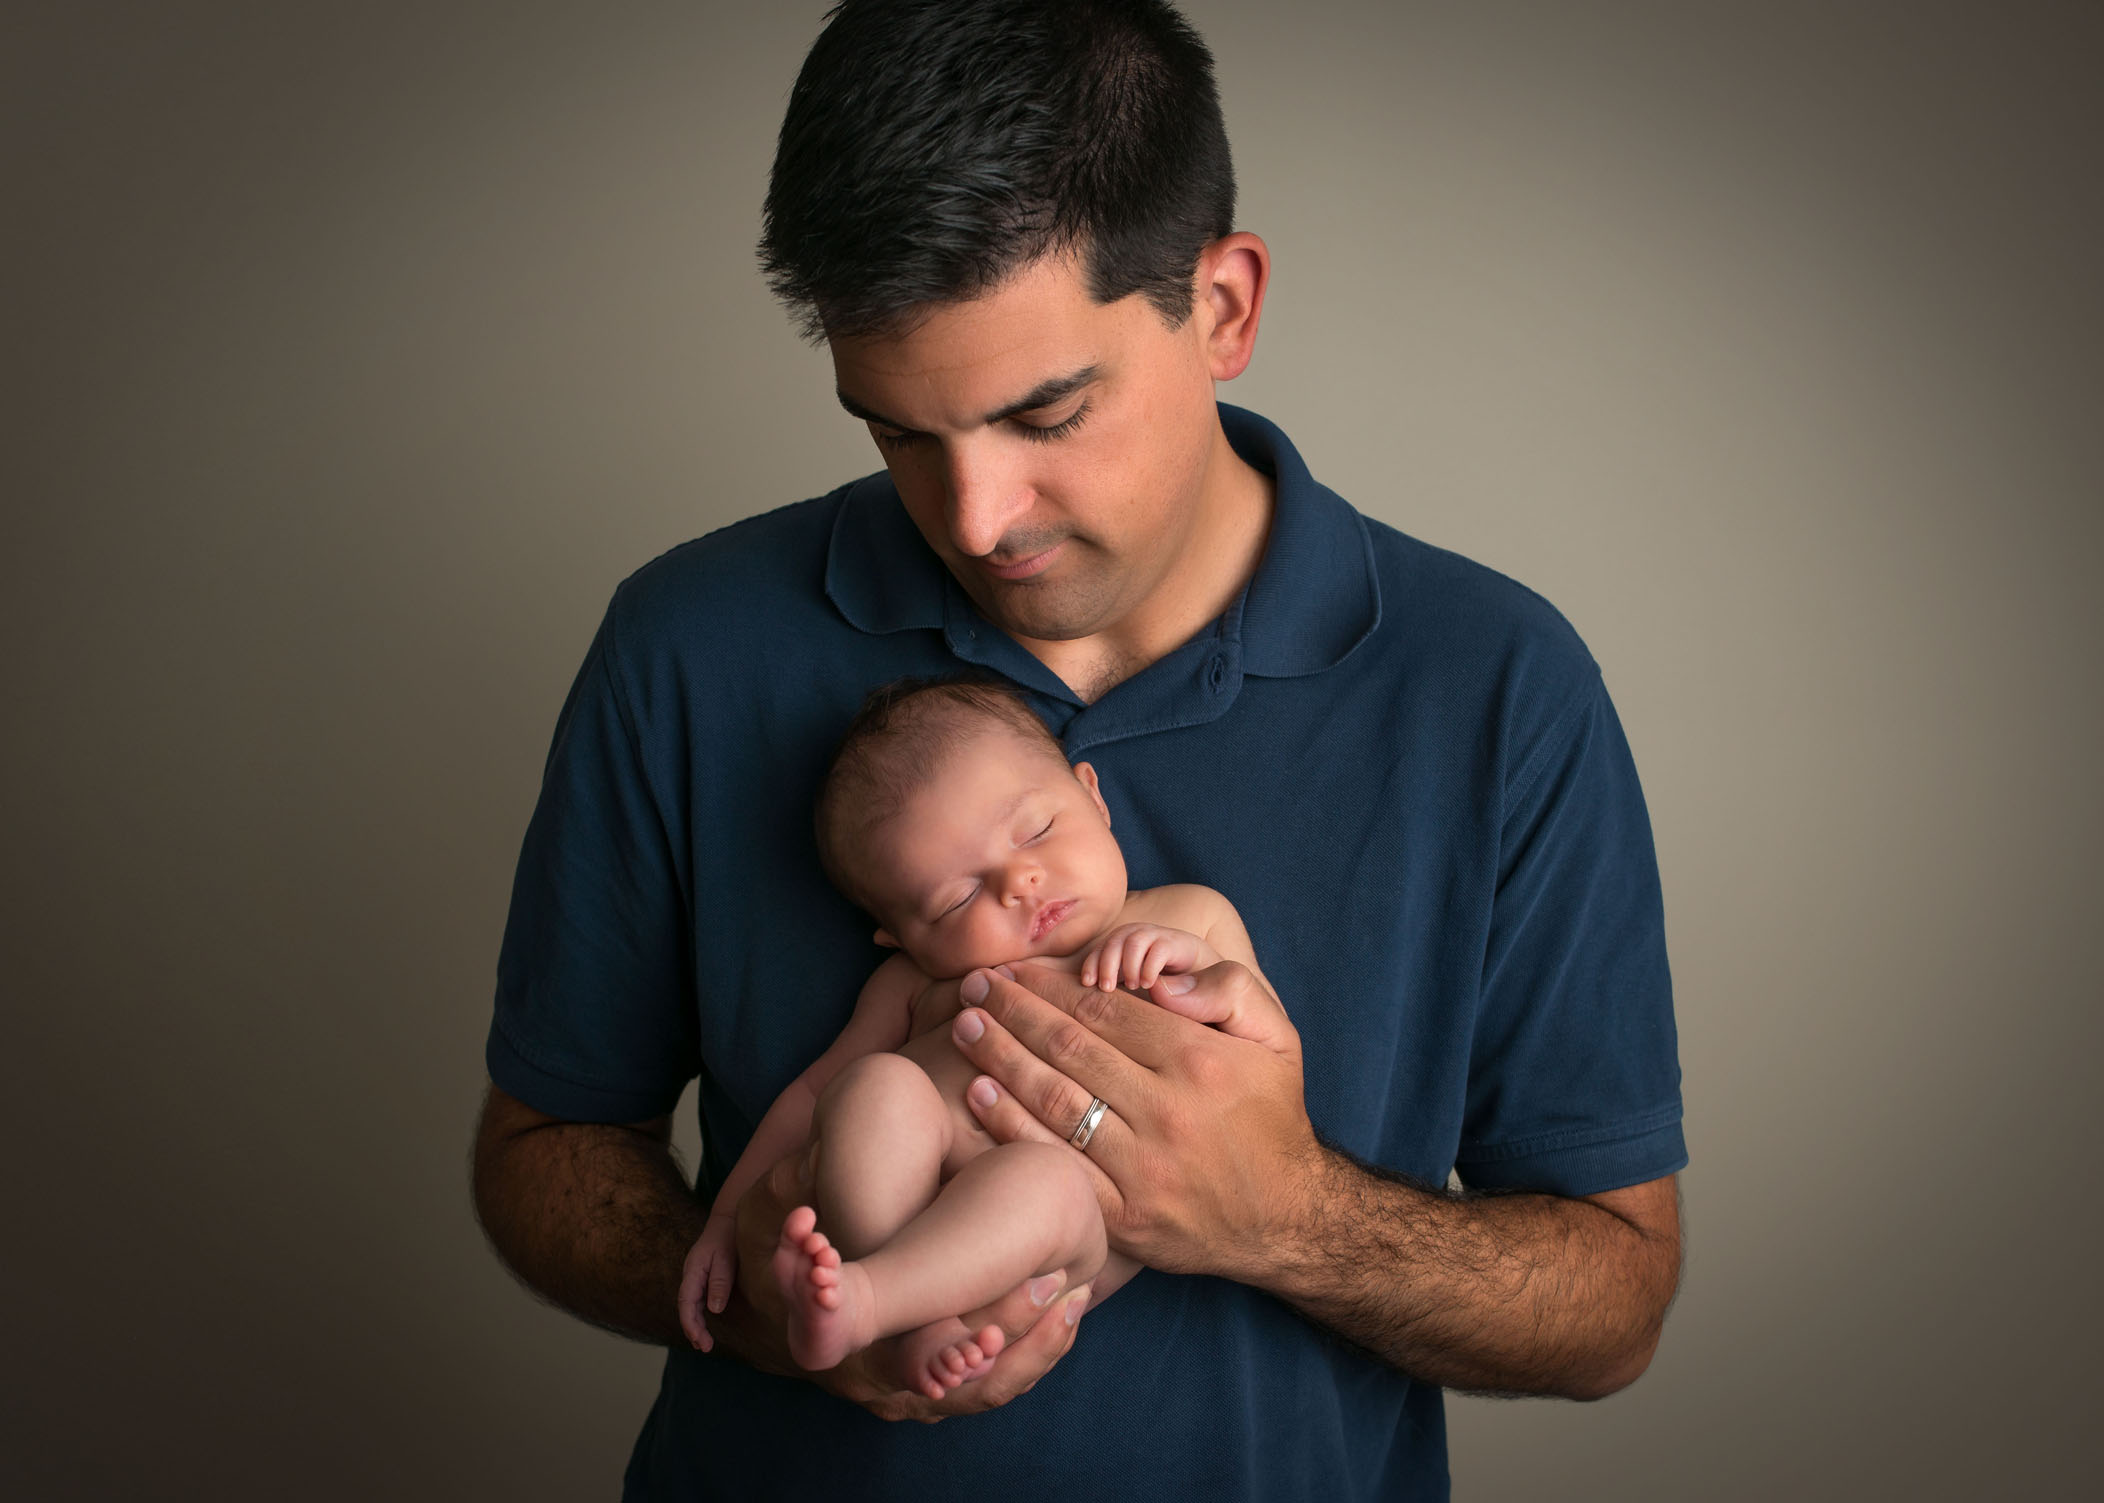 Dad holding his newborn daughter against his chest